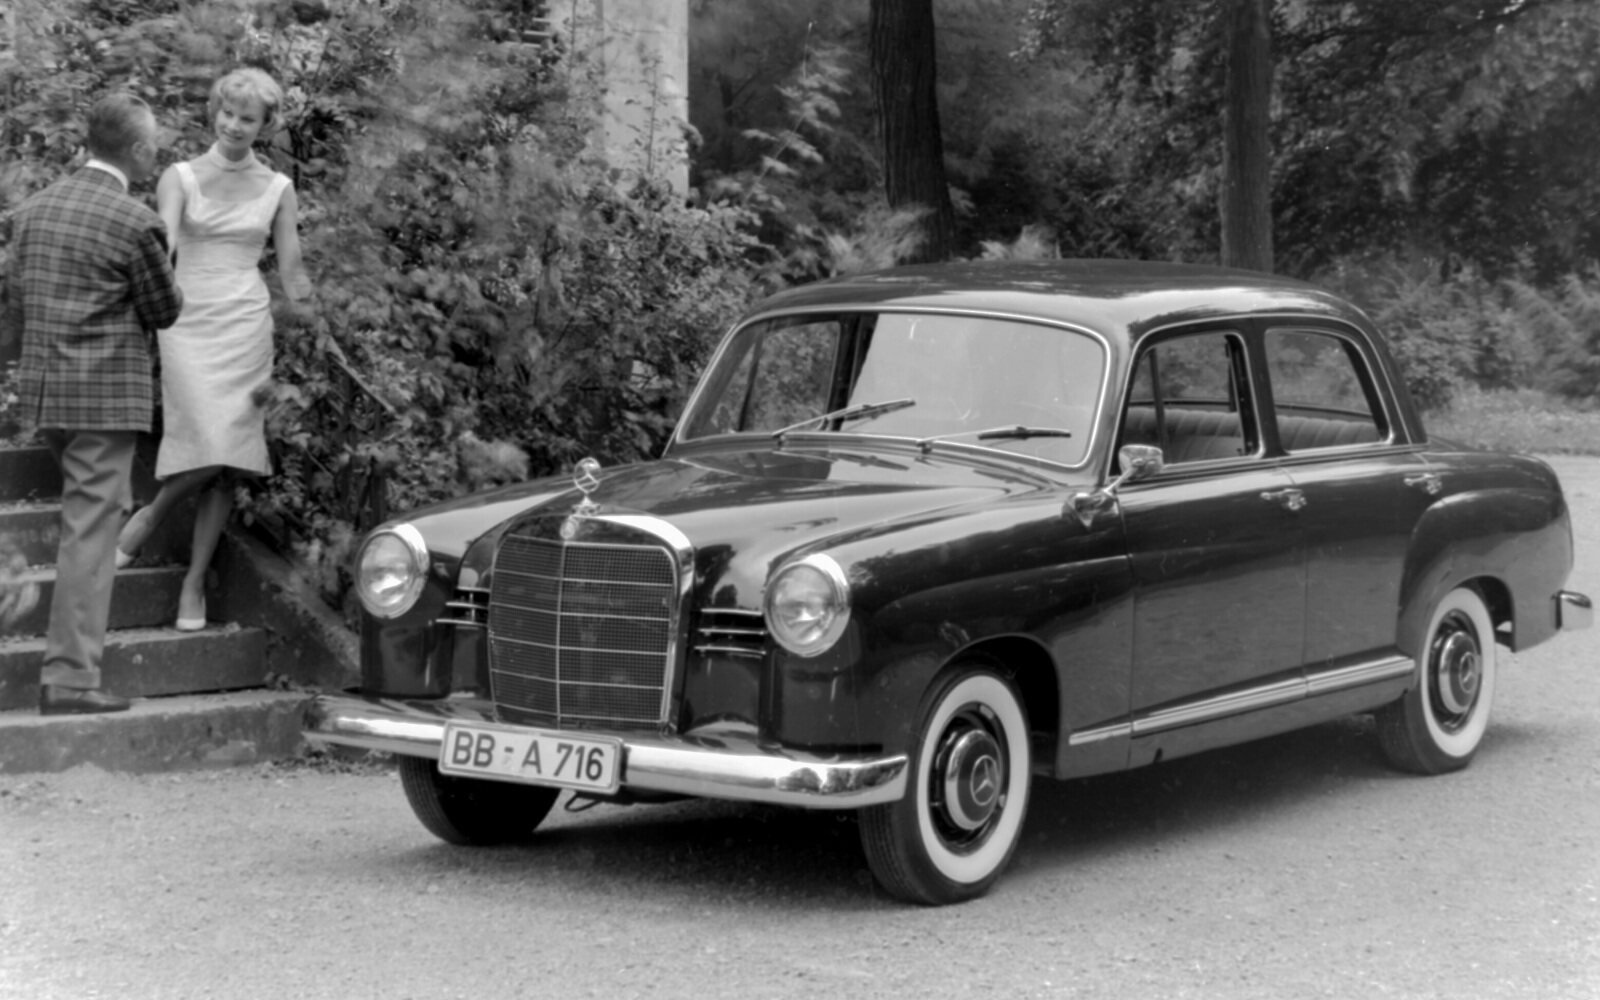 PKW4062 "Ponton Mercedes", four-cylinder models (W 120, W 121), 1959 - 1962